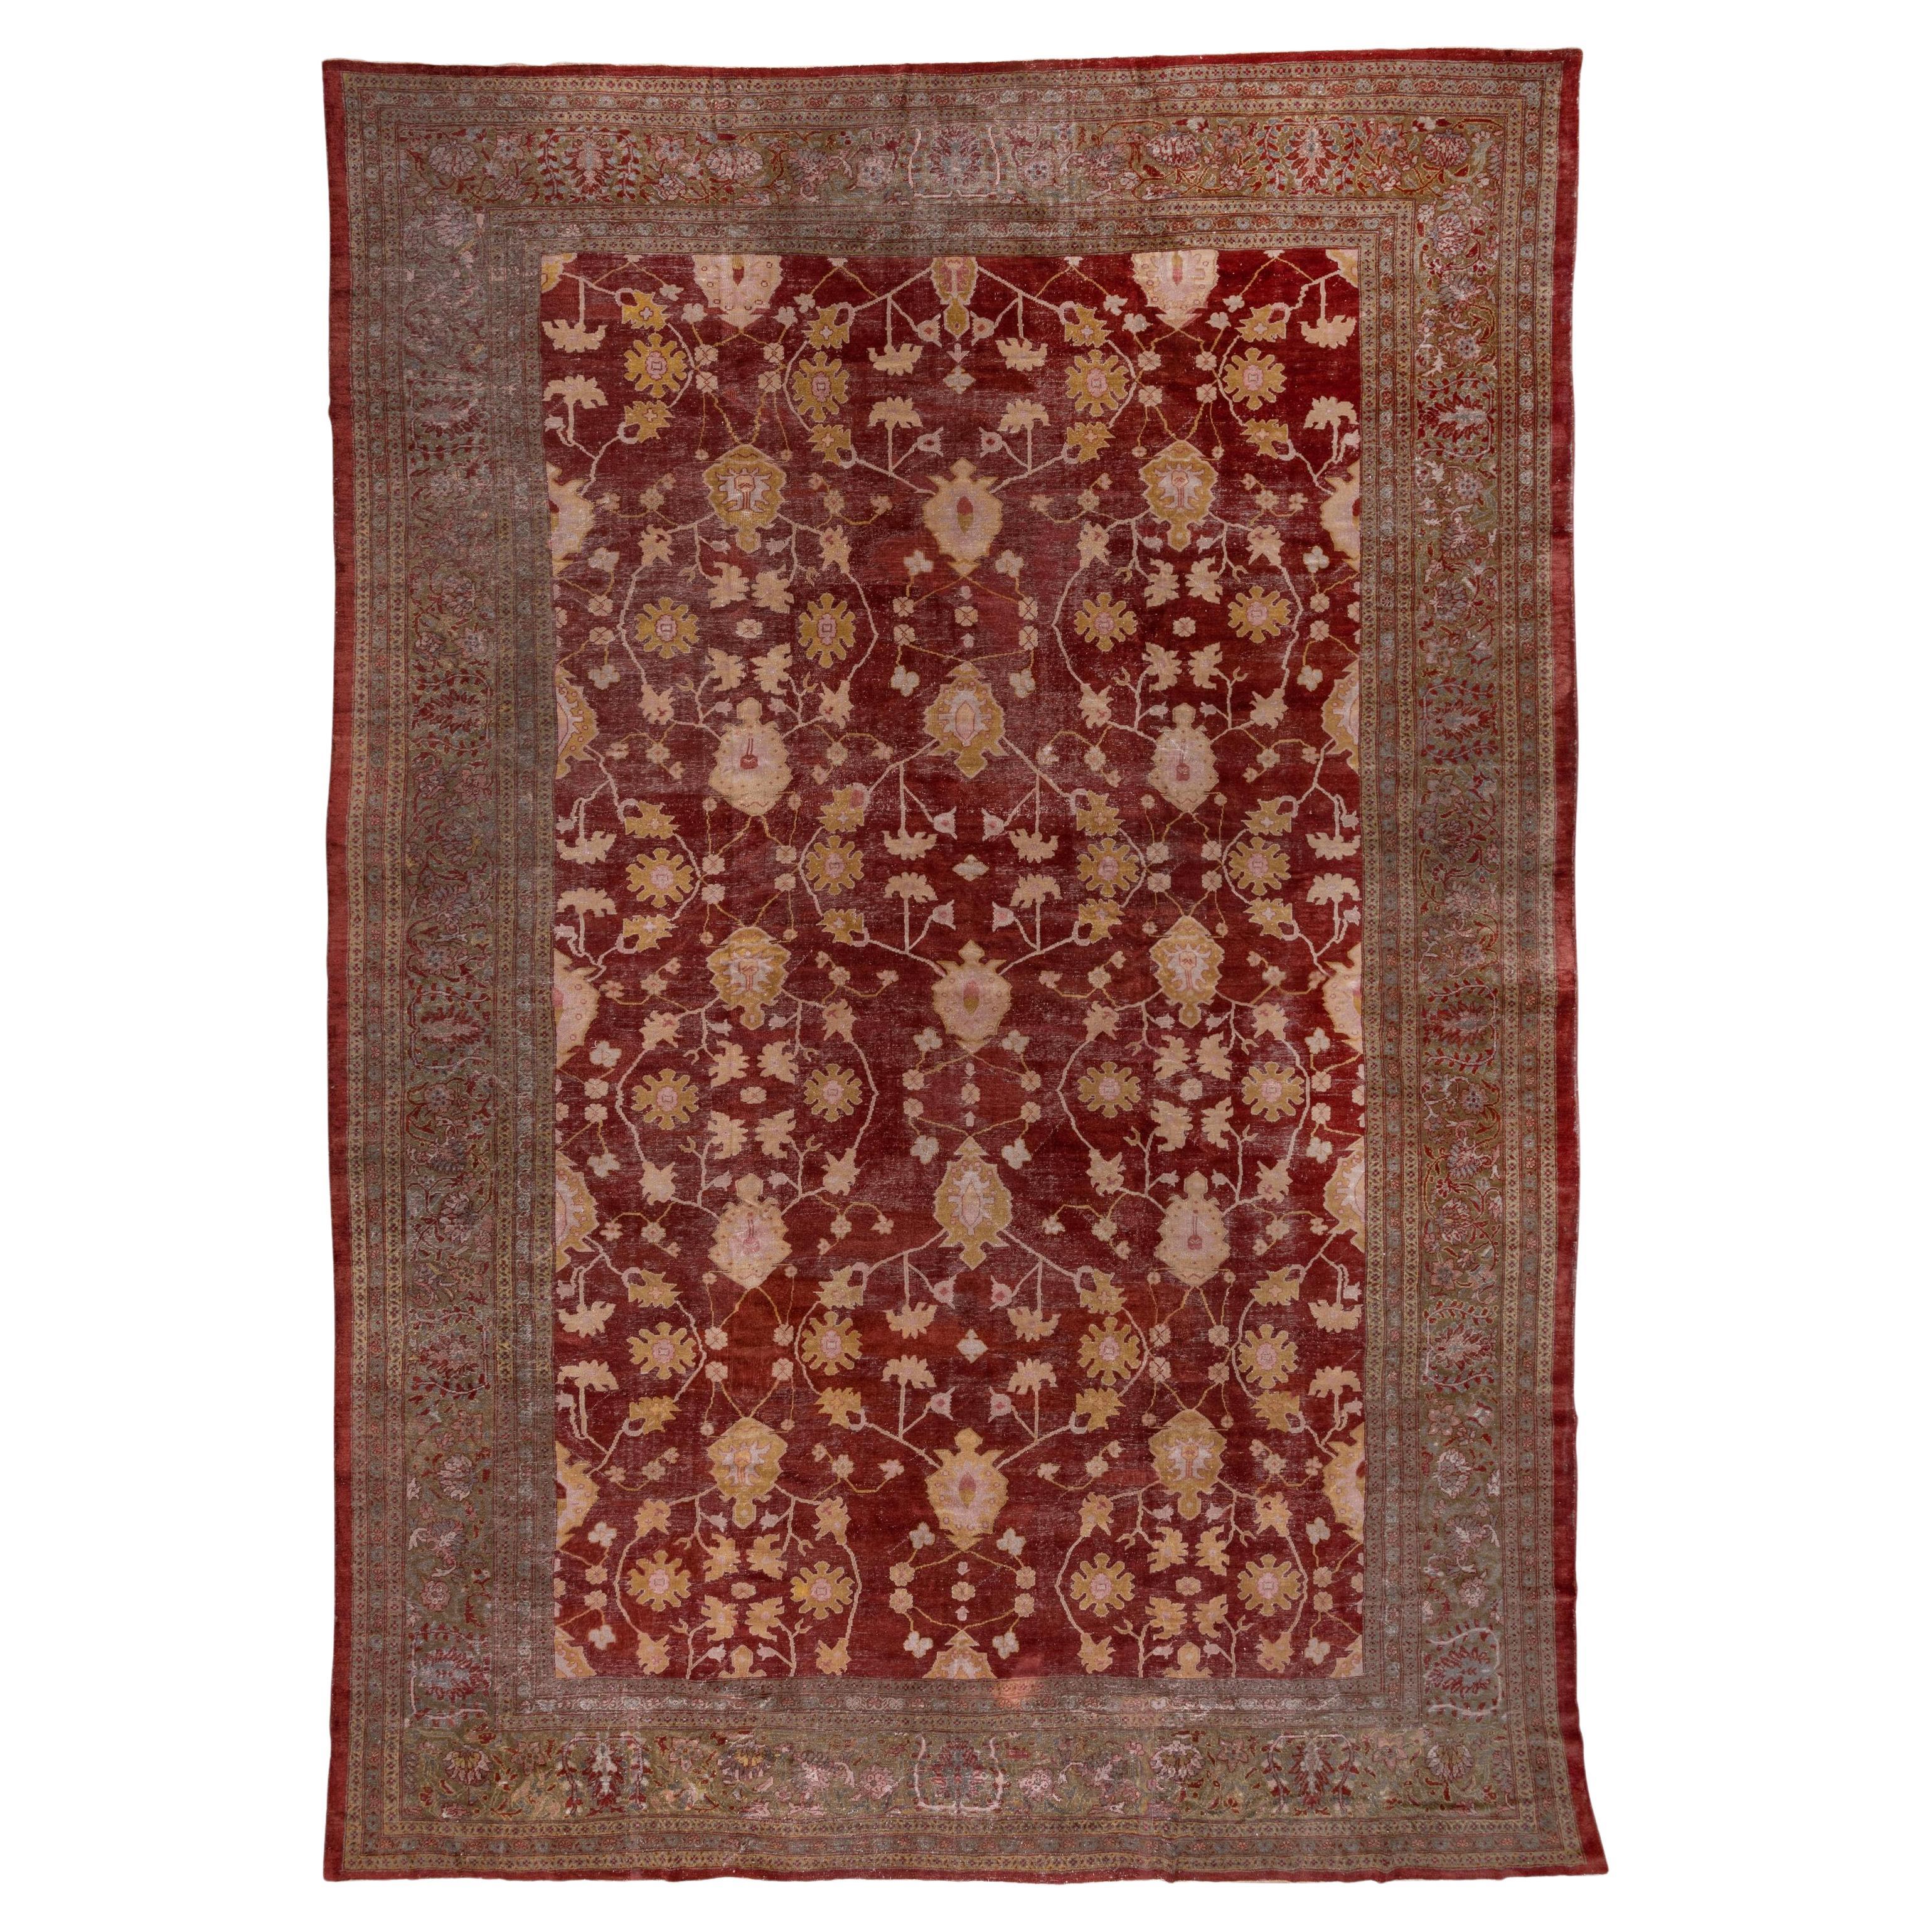 Antique Red Persian Sultanabad Mansion Carpet, circa 1910s